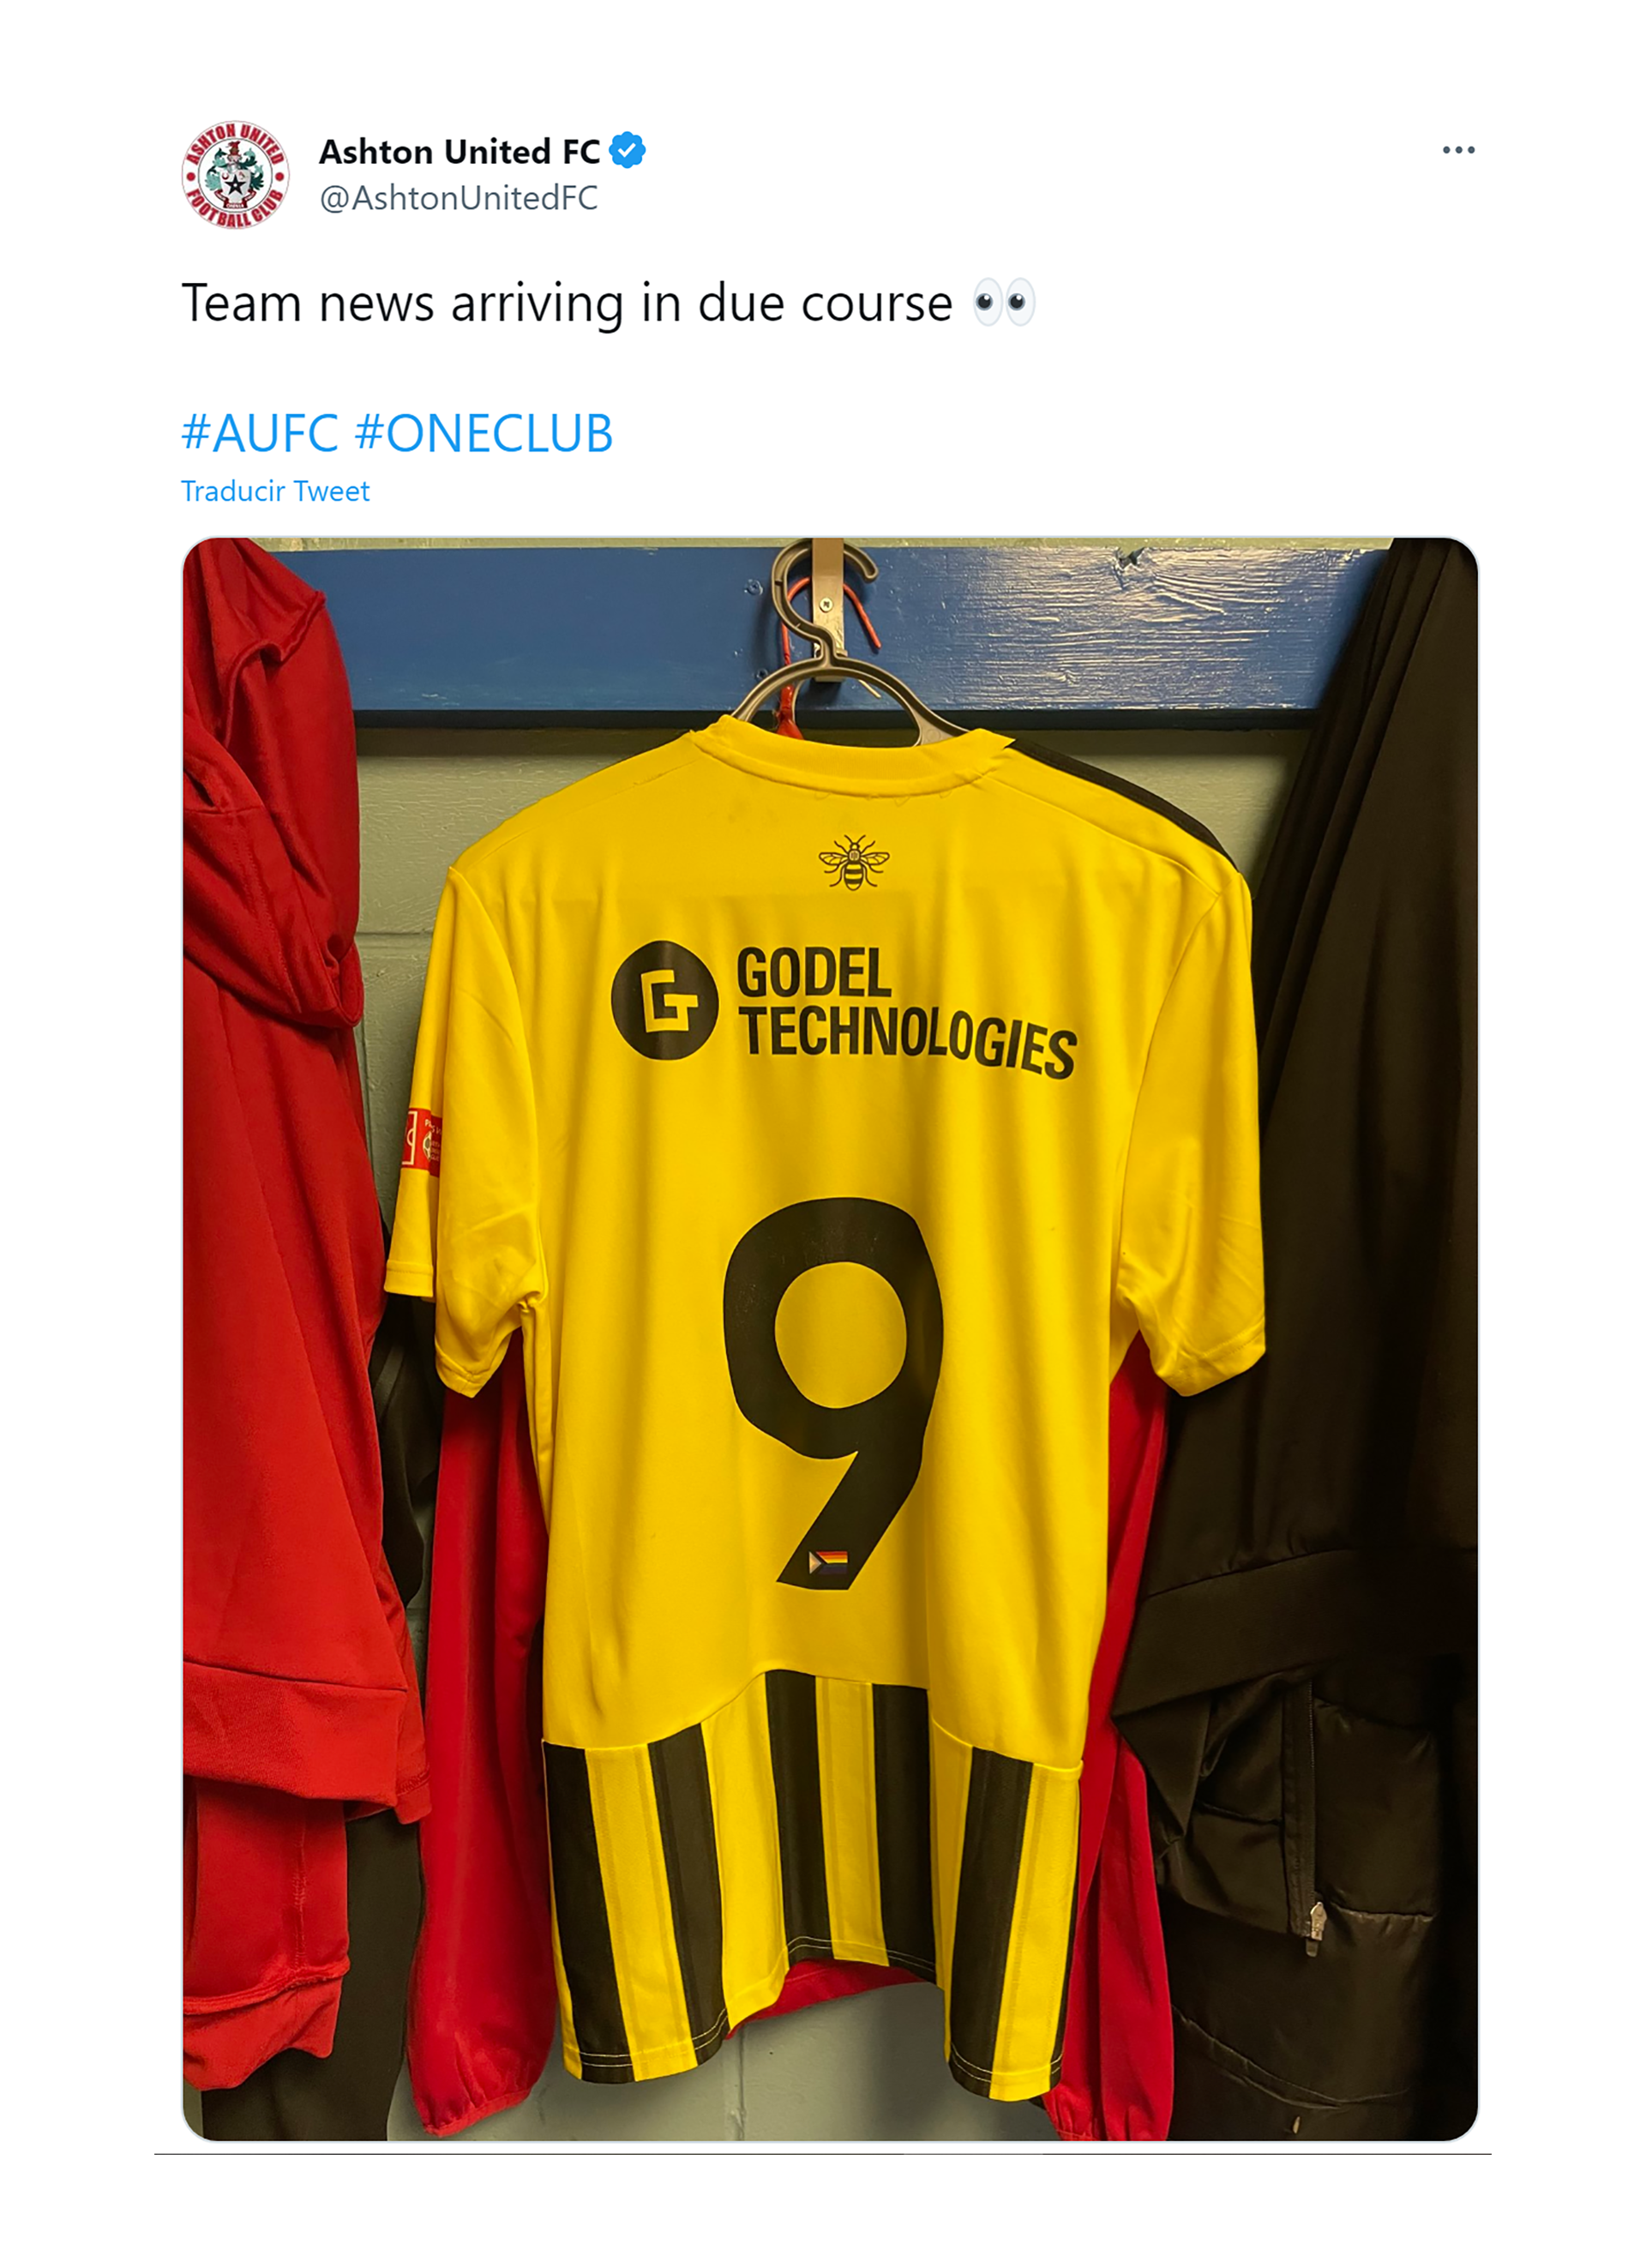 Post featuring a t-shirt similar to the one Haaland wore to Borussia Dortmund (@AshtonUnitedFC)